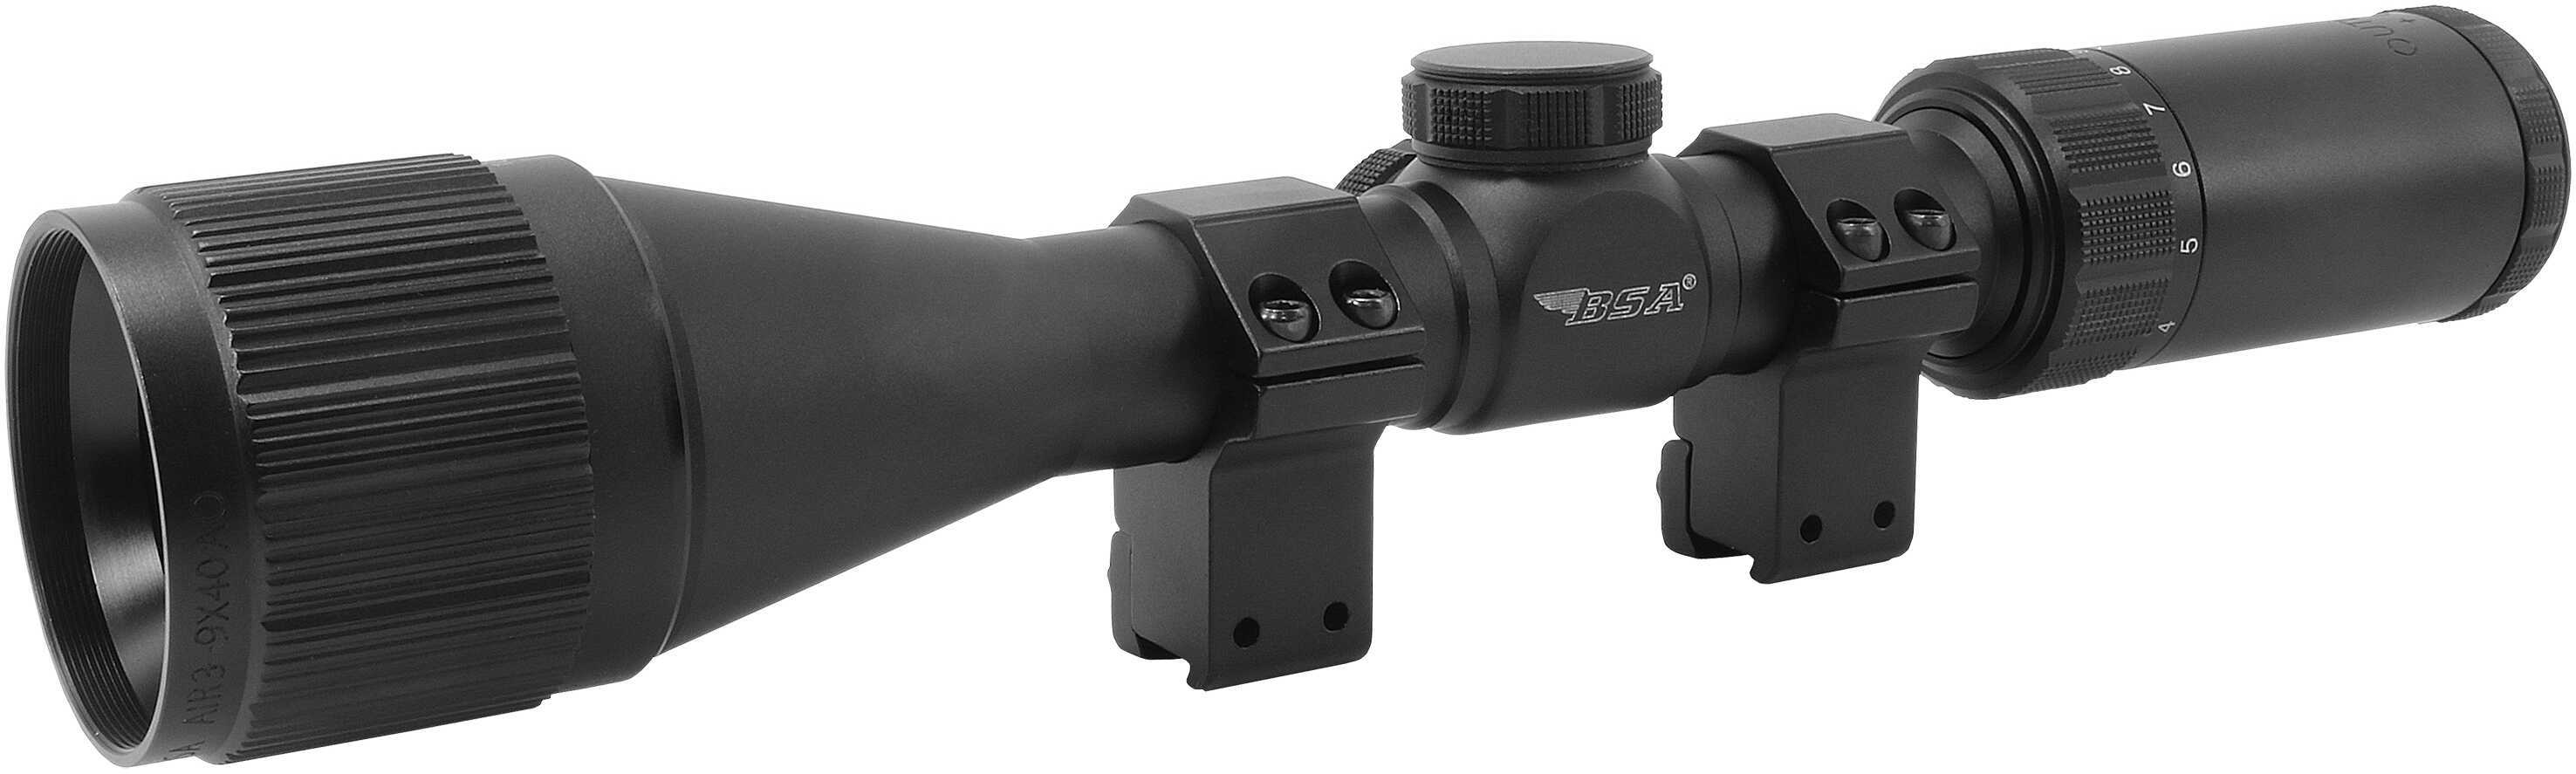 BSA Outlook Air Riflescope 3-9x40mm, Mil Dot Reticle, AO, Black